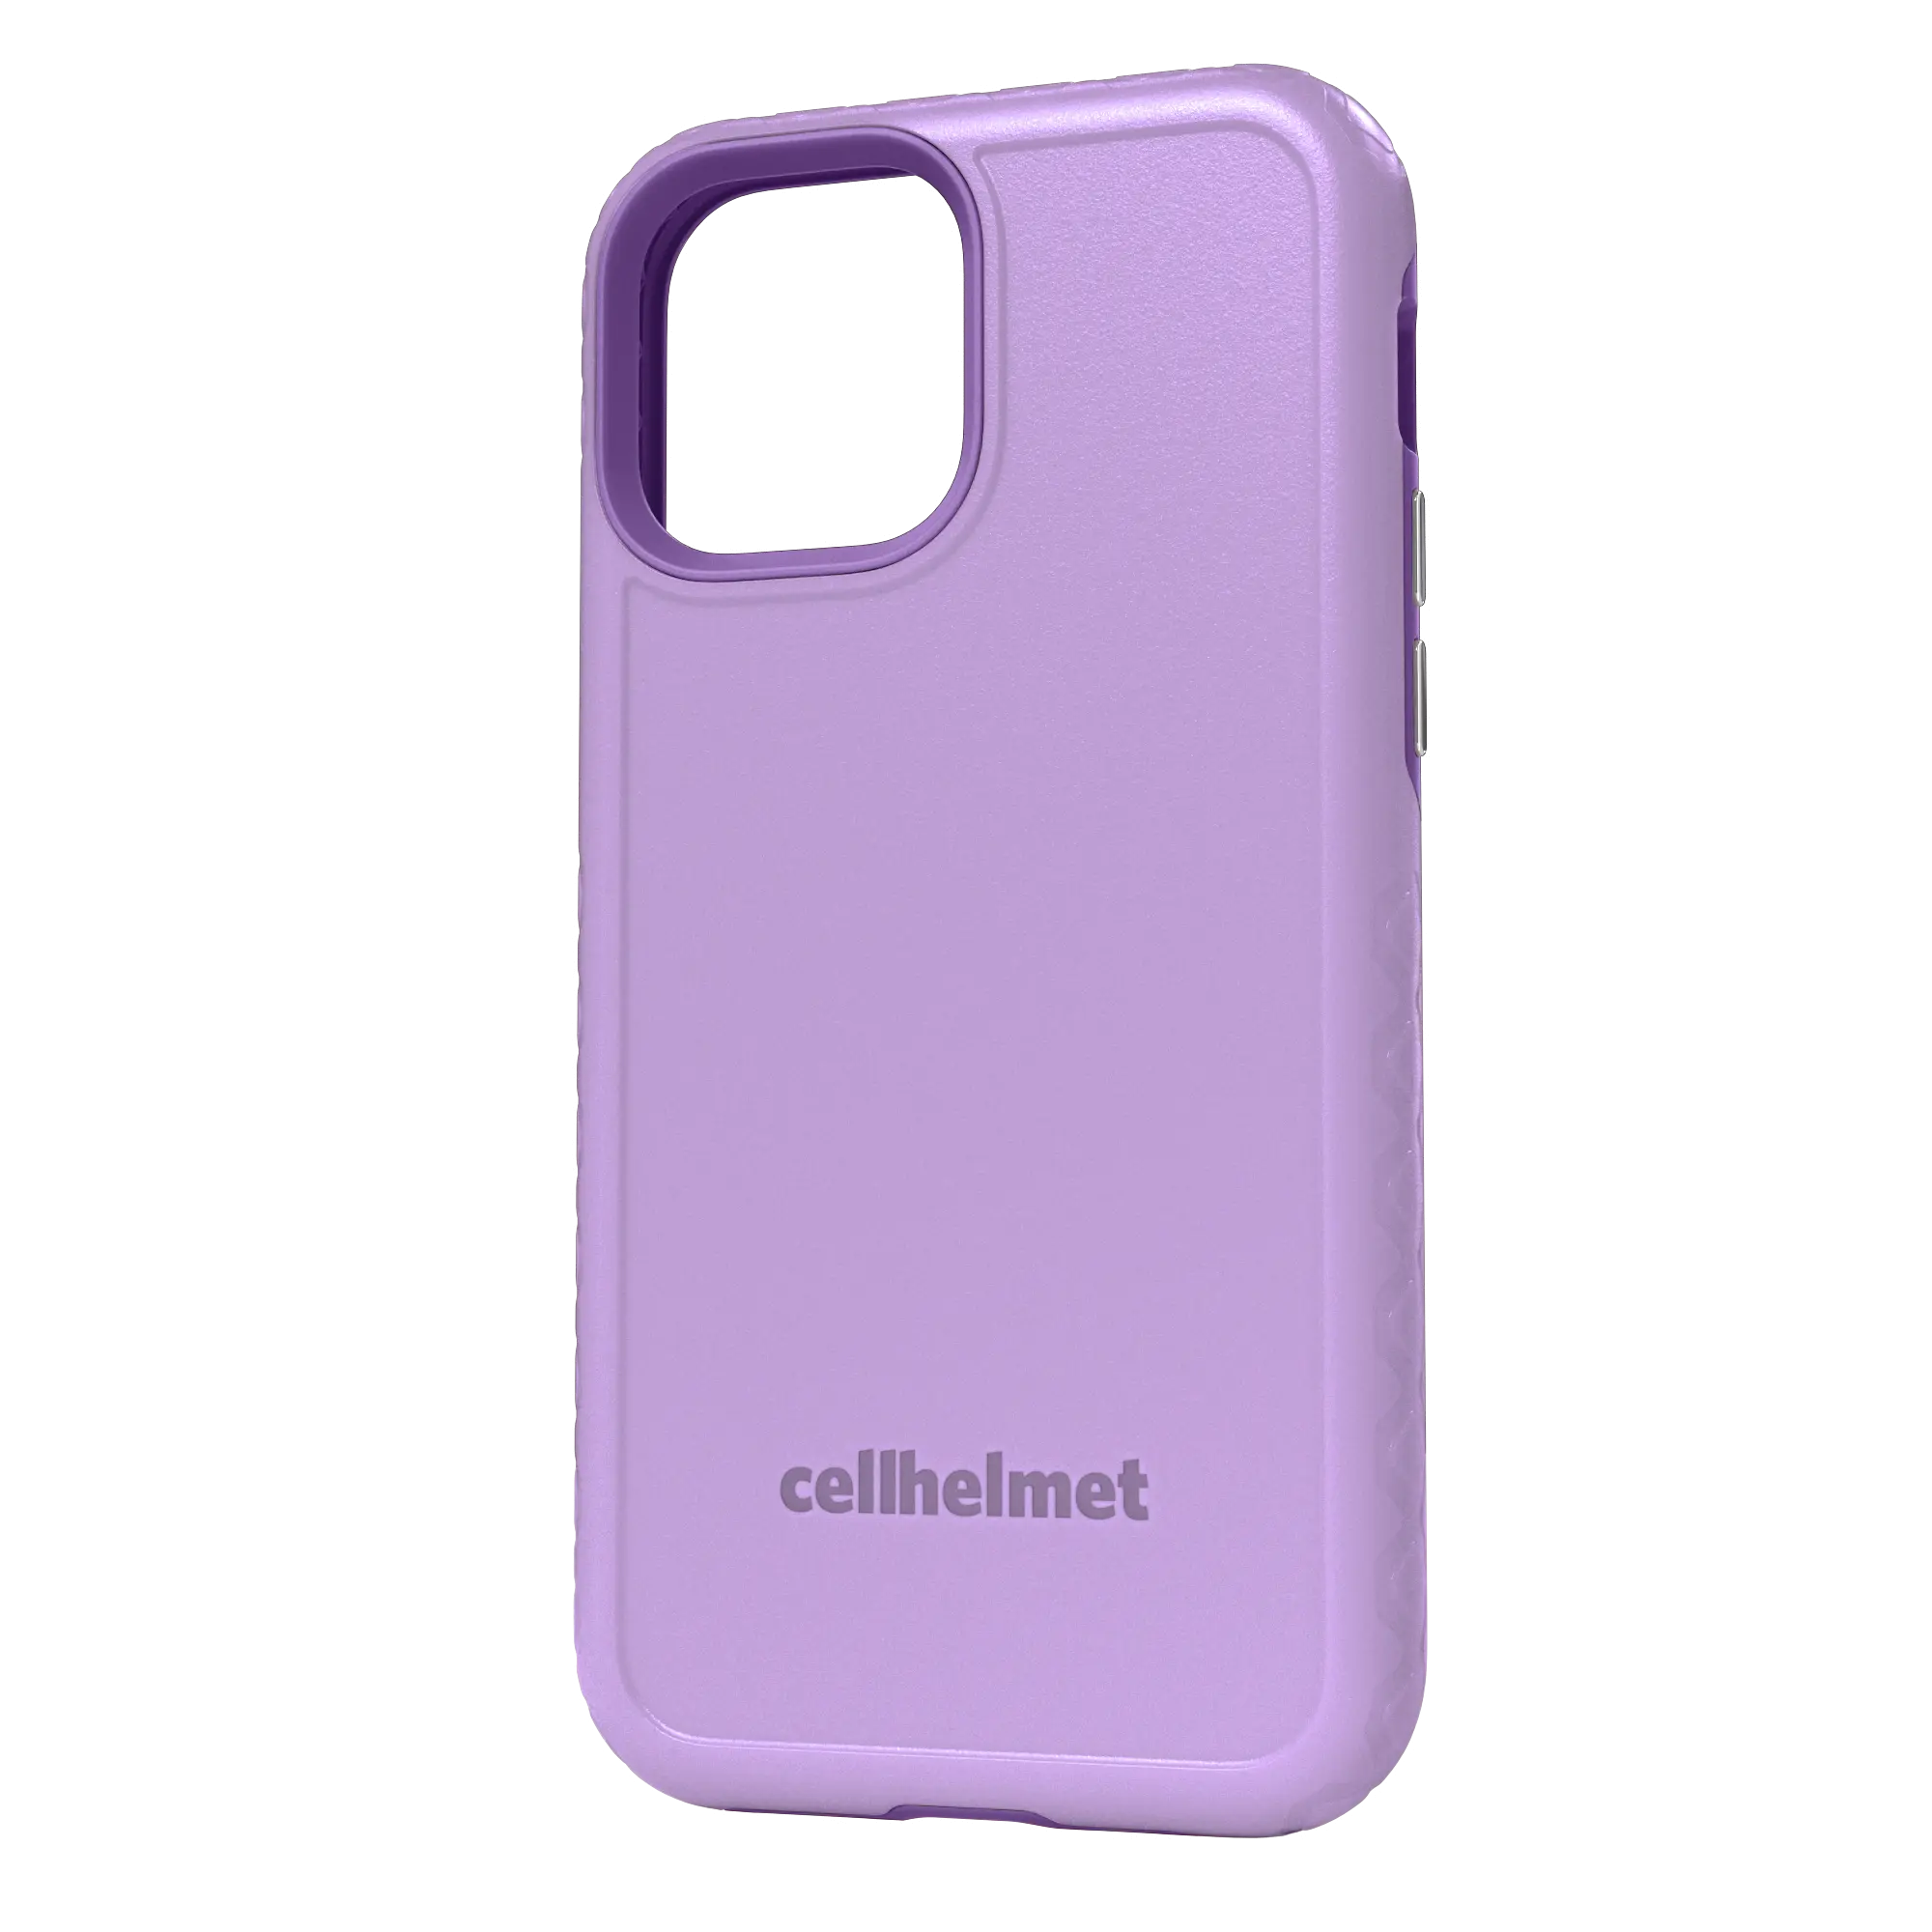 Purple cellhelmet Personalized Case for iPhone 12 Pro